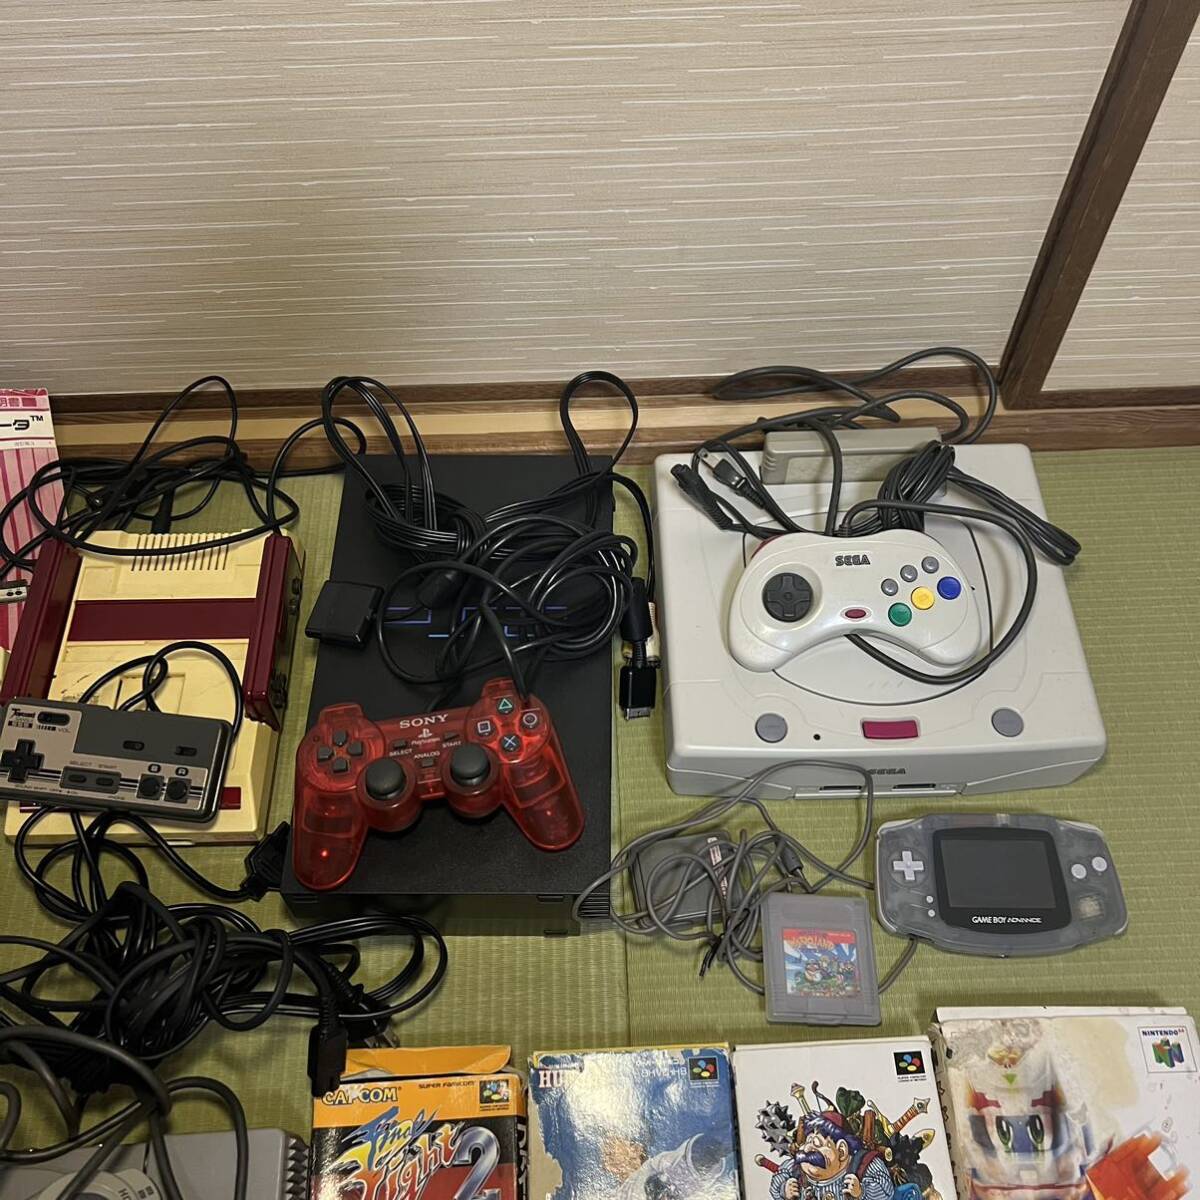 [1 иен ] старт игра машина корпус + soft суммировать Famicom Super Famicom 64 PlayStation Sega Saturn Game Gear advance 